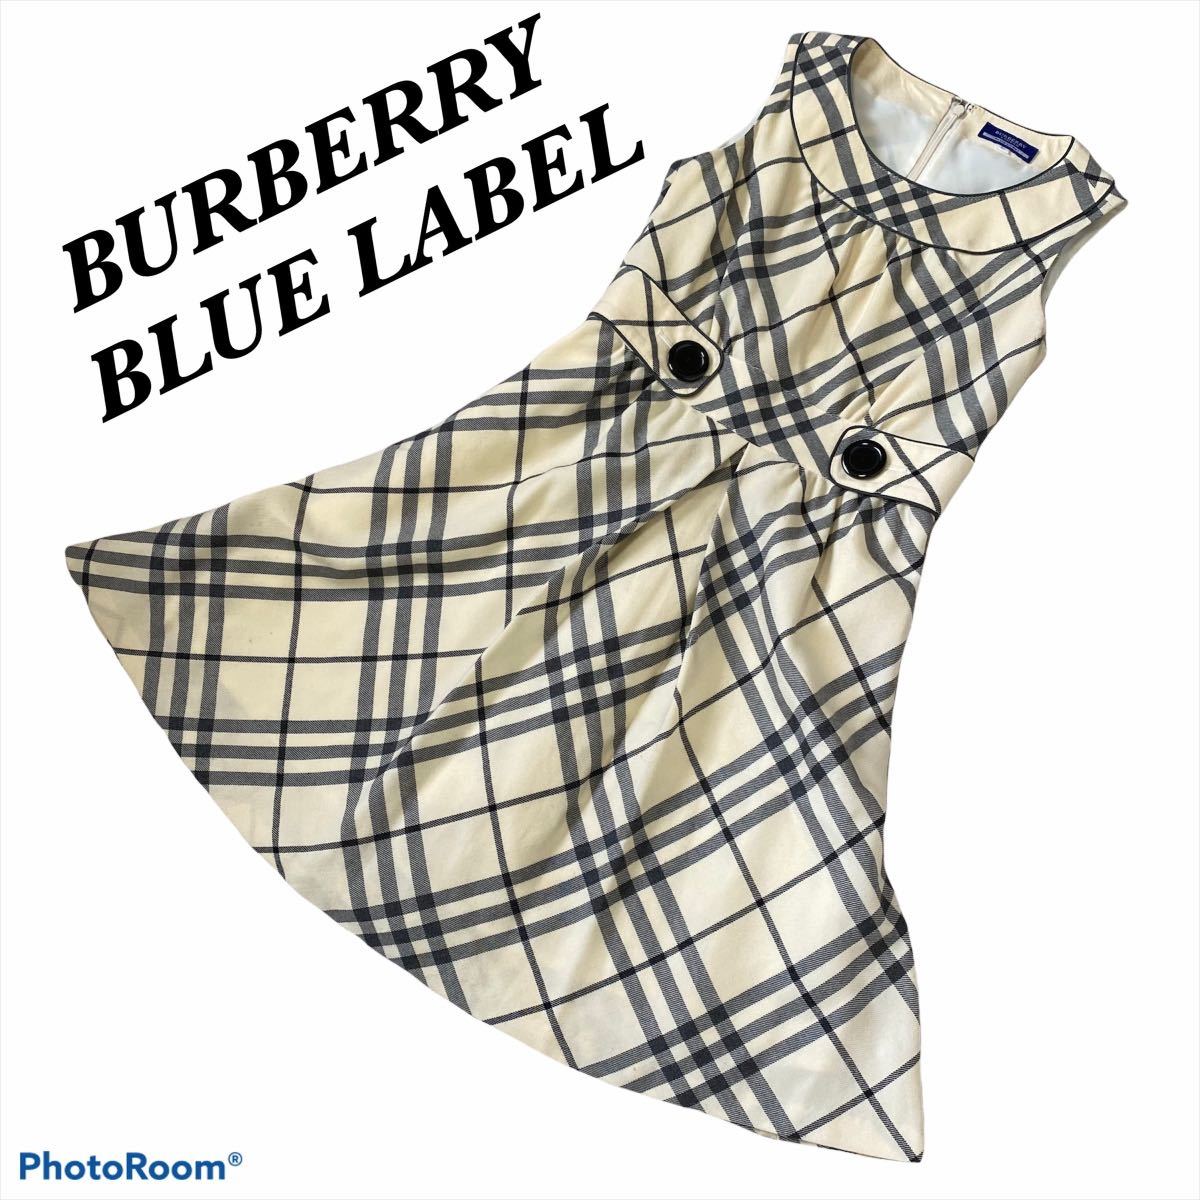 BURBERRY BLUE LABEL バーバリーブルーレーベル 【日本産】 AL完売しました ノバチェック Aライン 36 ノースリーブ ワンピース